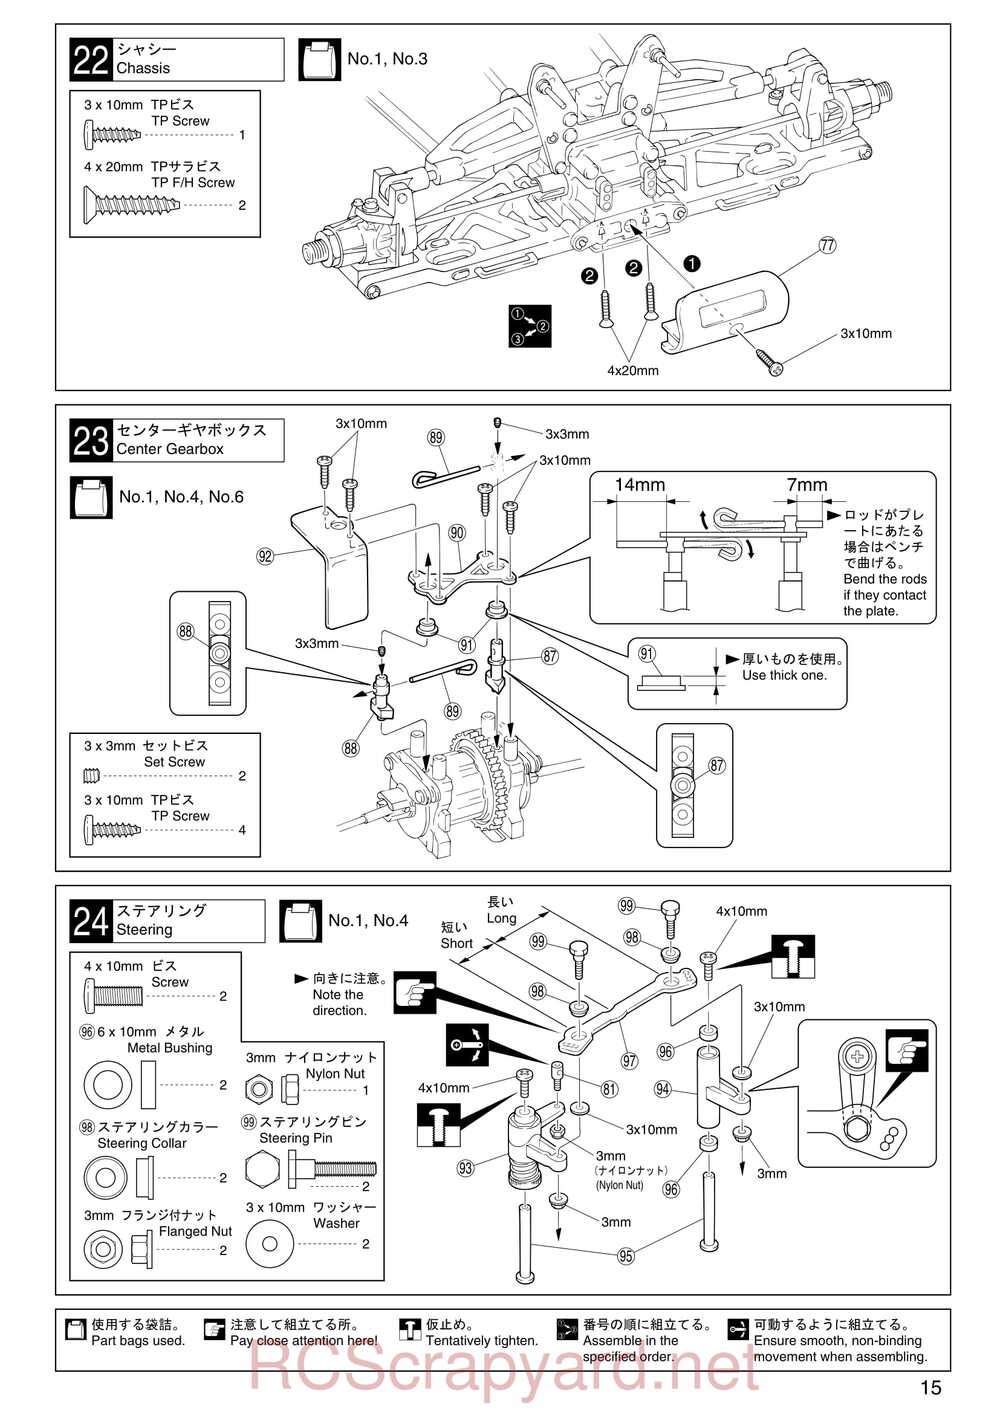 Kyosho - 31192 - Inferno-MP-7-5 Sports - Manual - Page 15